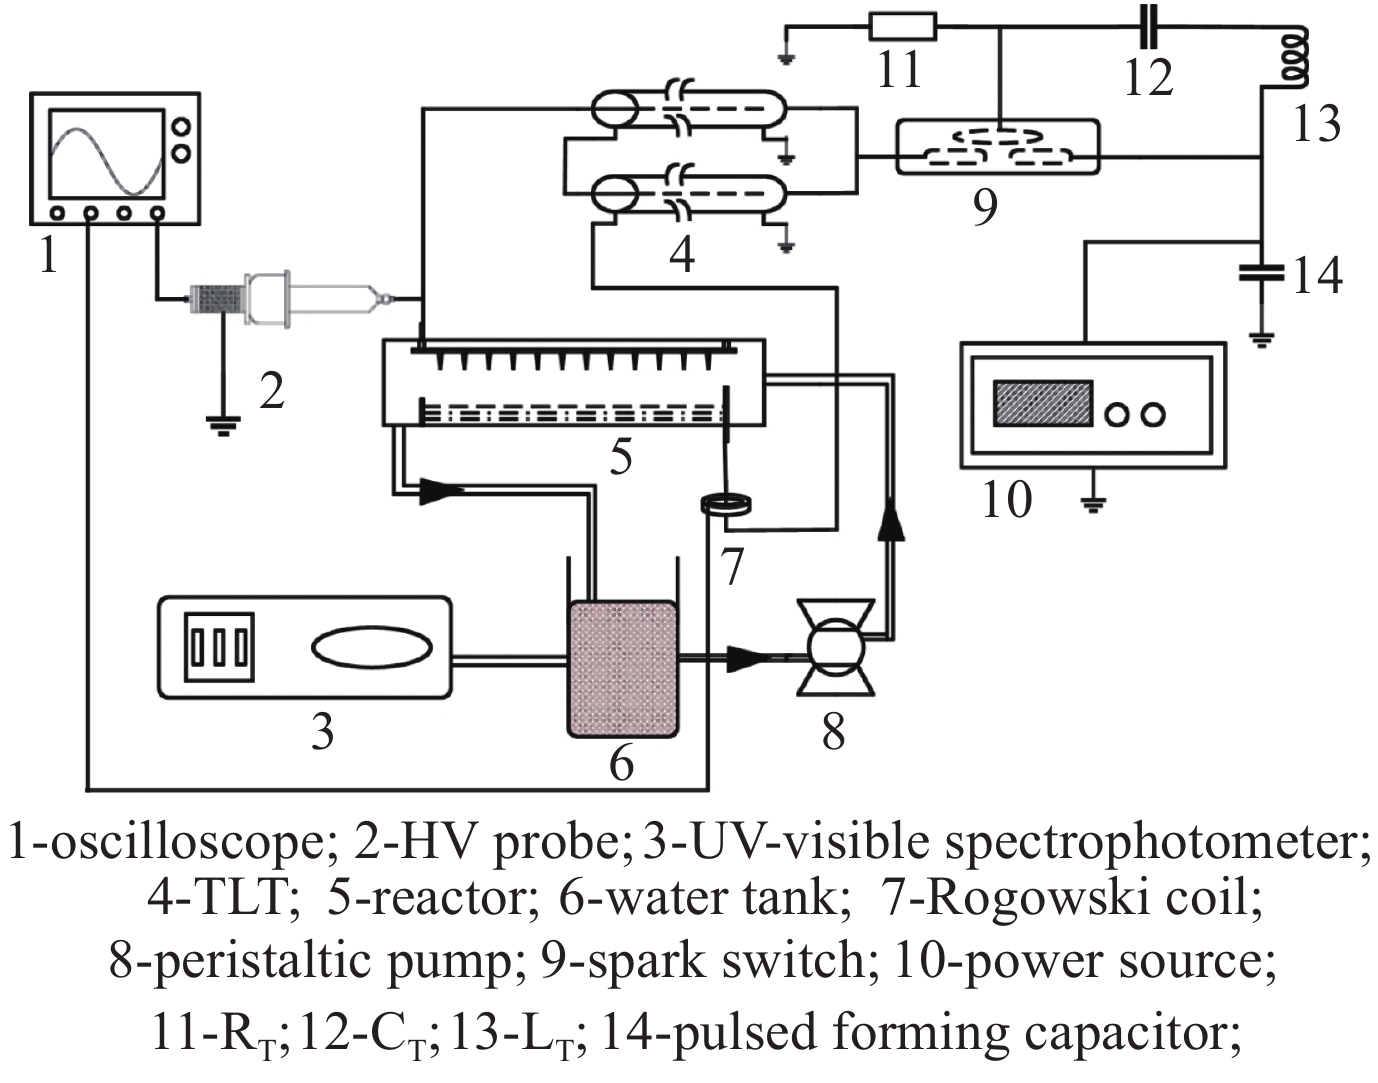 Schematic diagram of the corona discharge reactor experimental setup电晕放电试验装置示意图